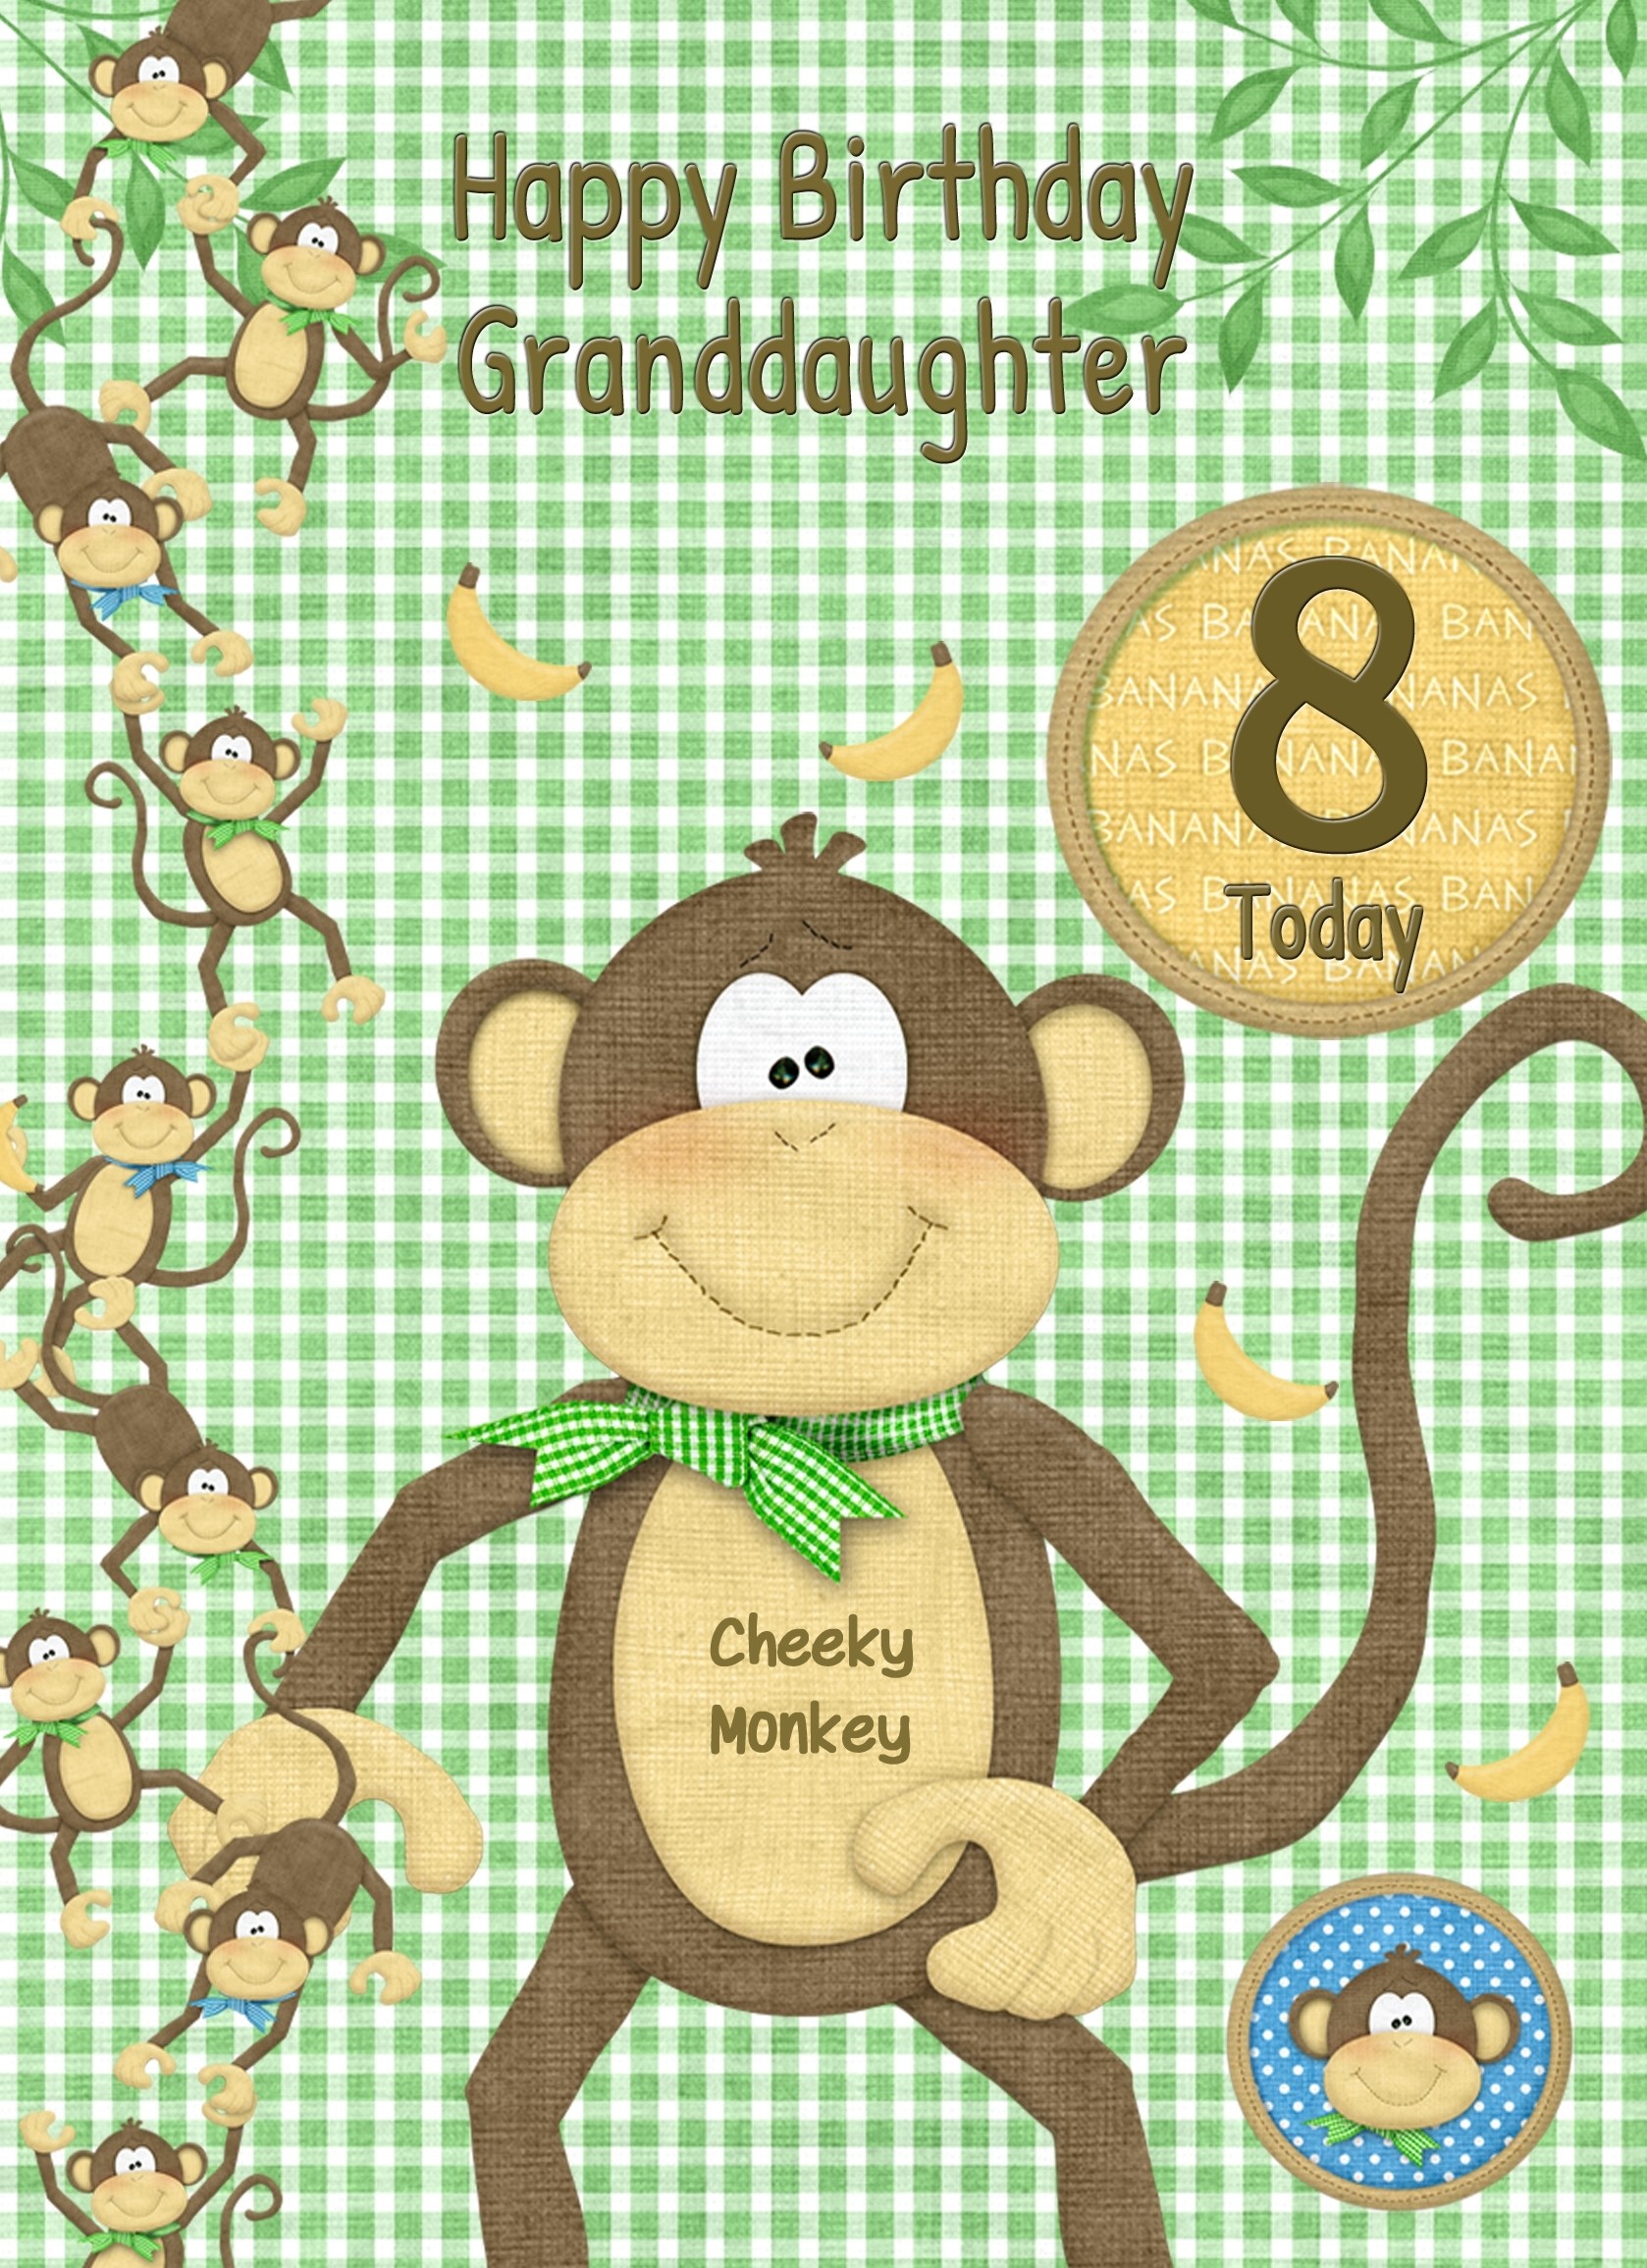 Kids 8th Birthday Cheeky Monkey Cartoon Card for Granddaughter